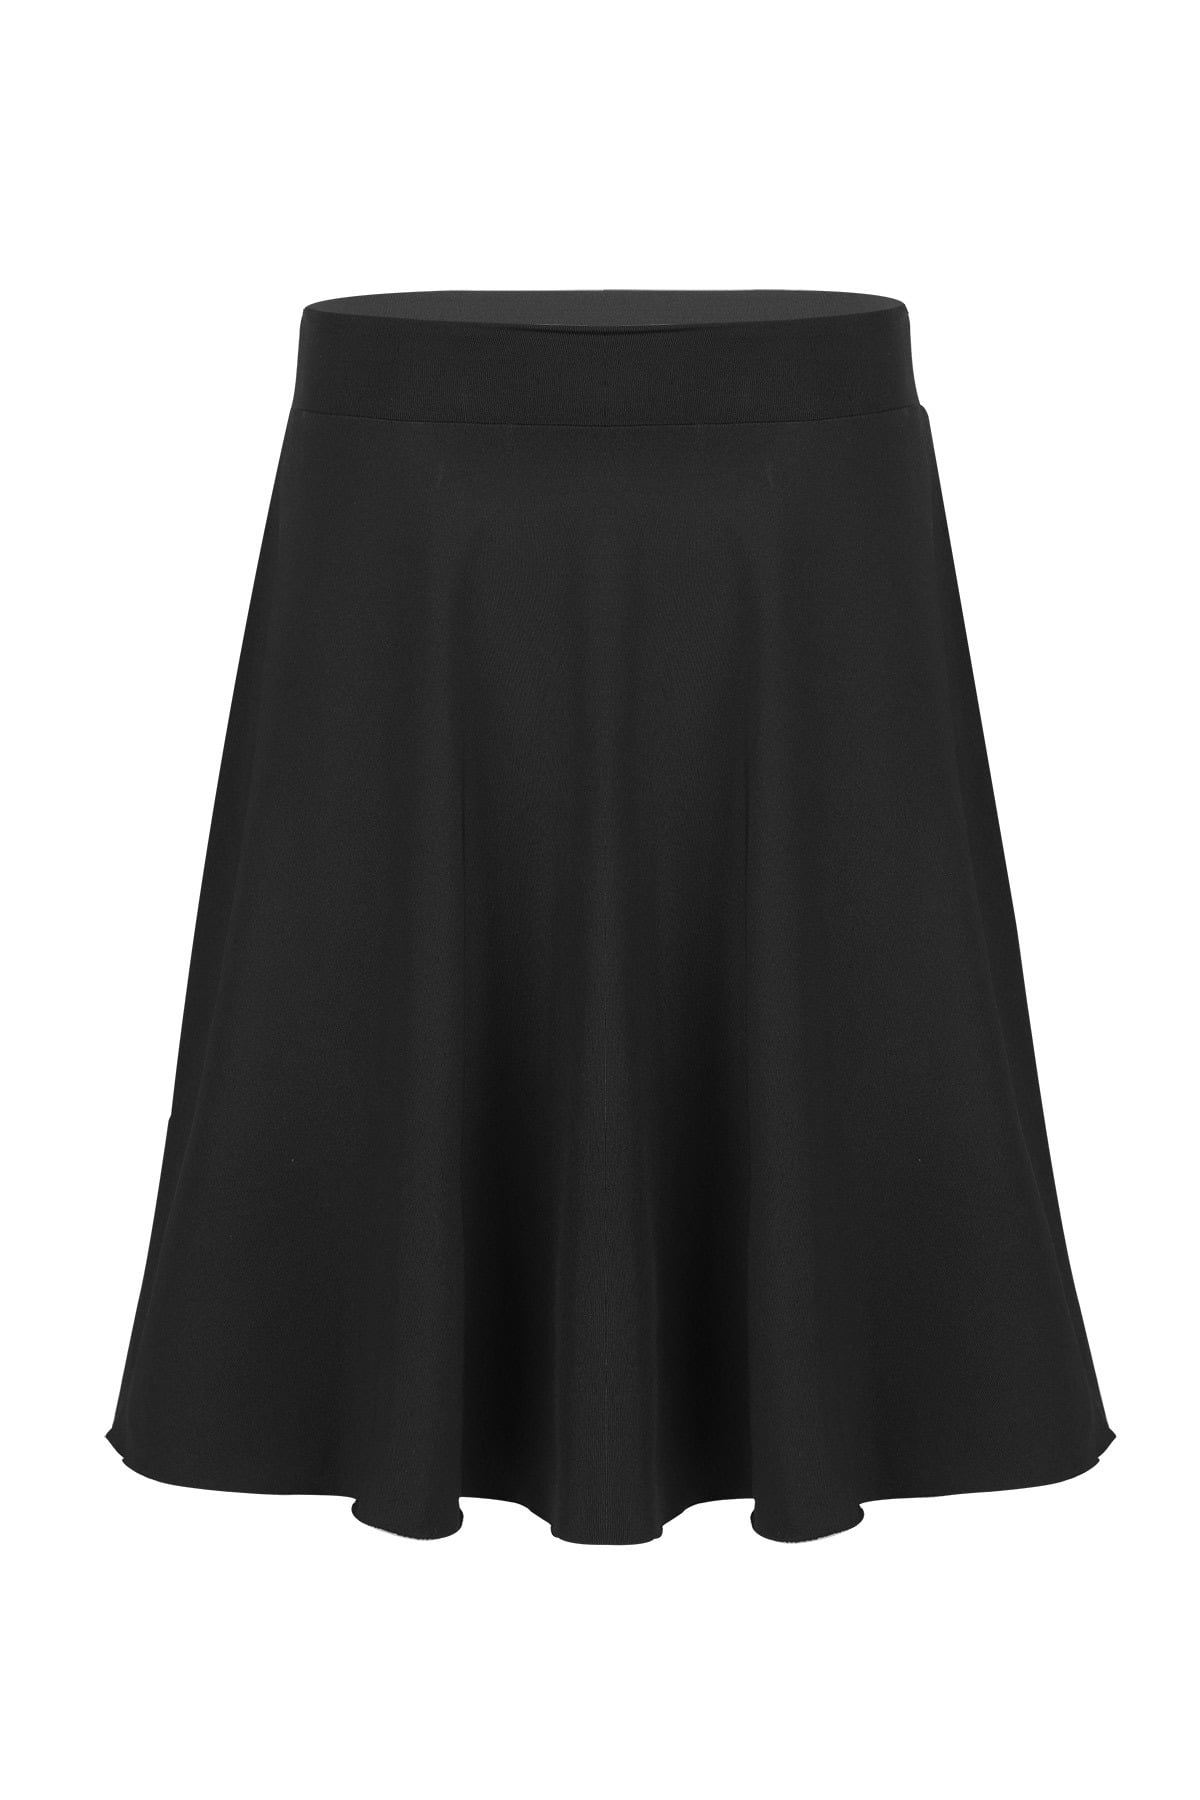 YEAHDOR Kids Girls Solid Color A-Line Skirt Knee Length Full A-Line ...